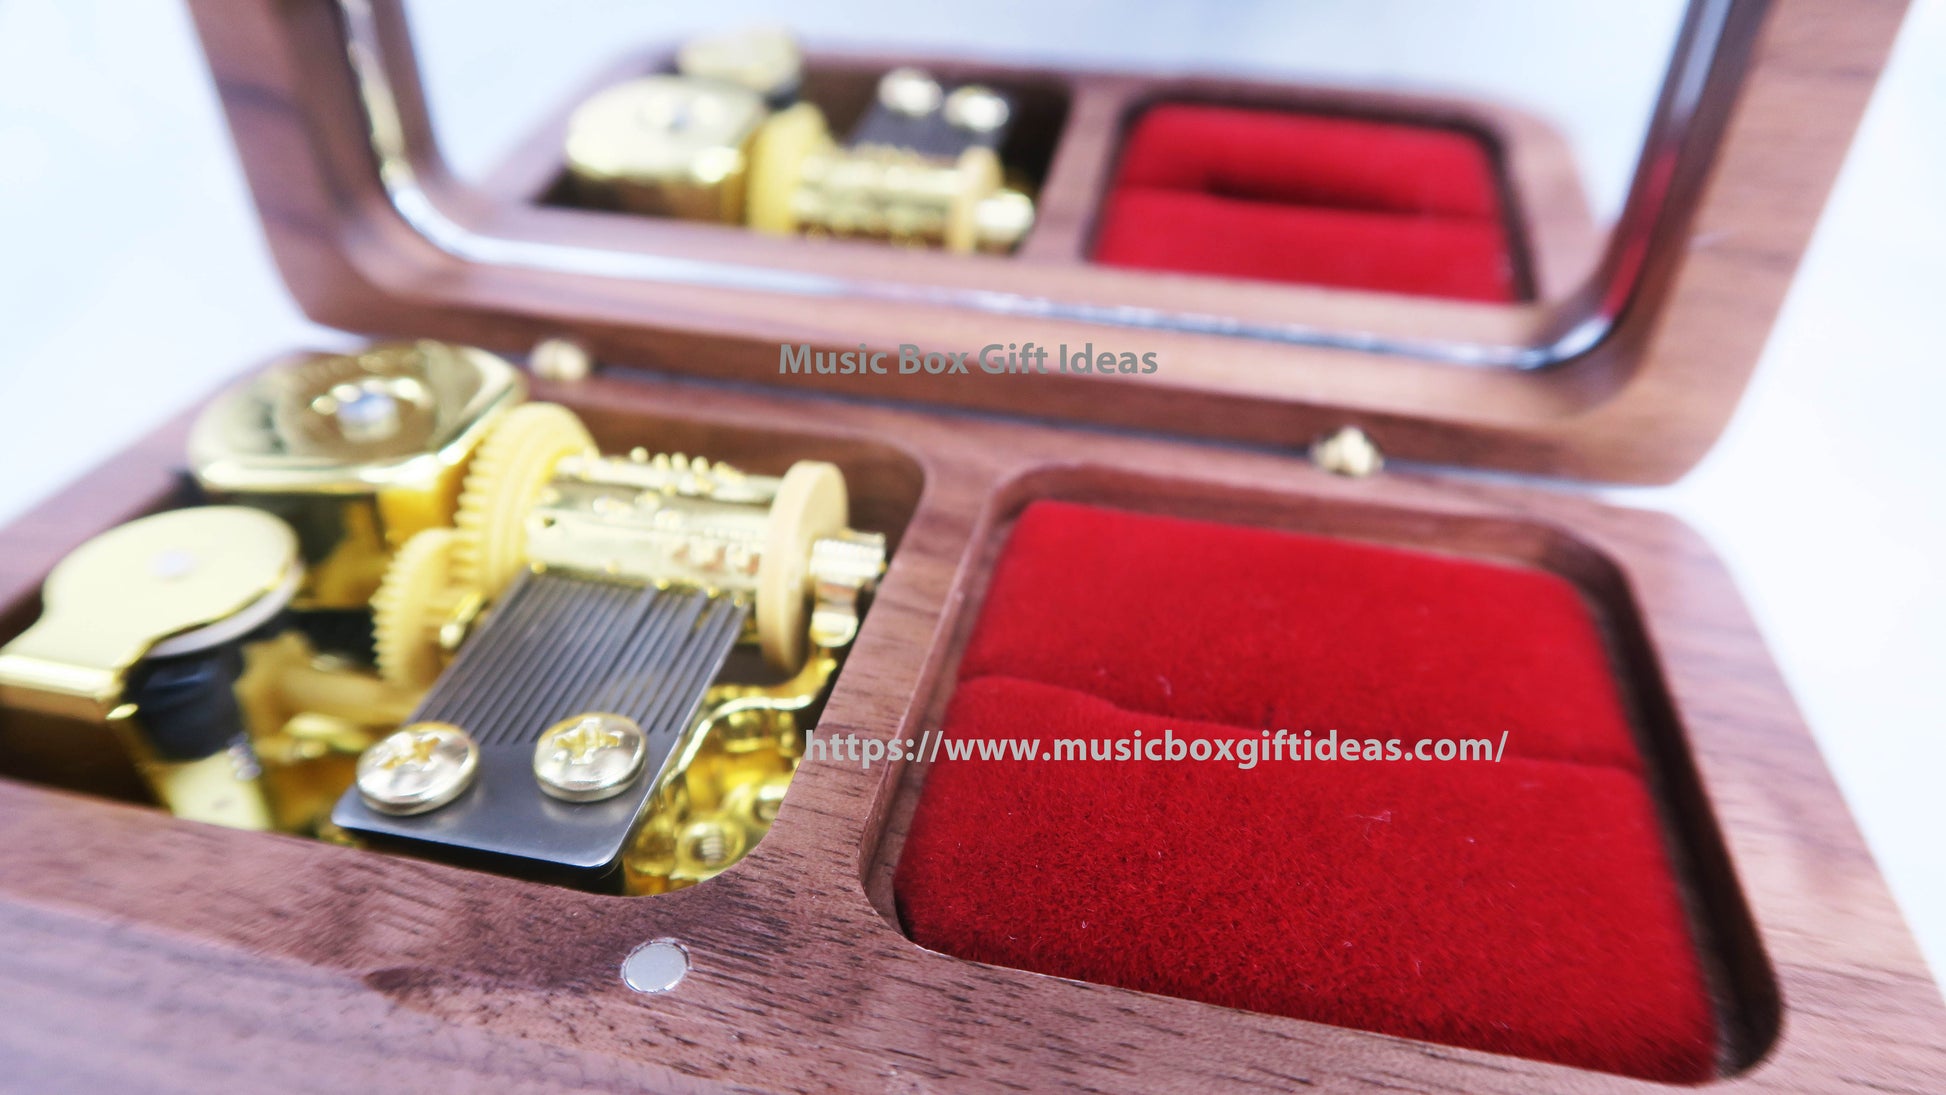 Johann Pachelbel Canon in D Classical Music18-Note Jewelry Music Box Gift (Wooden Clockwork) - Music Box Gift Ideas